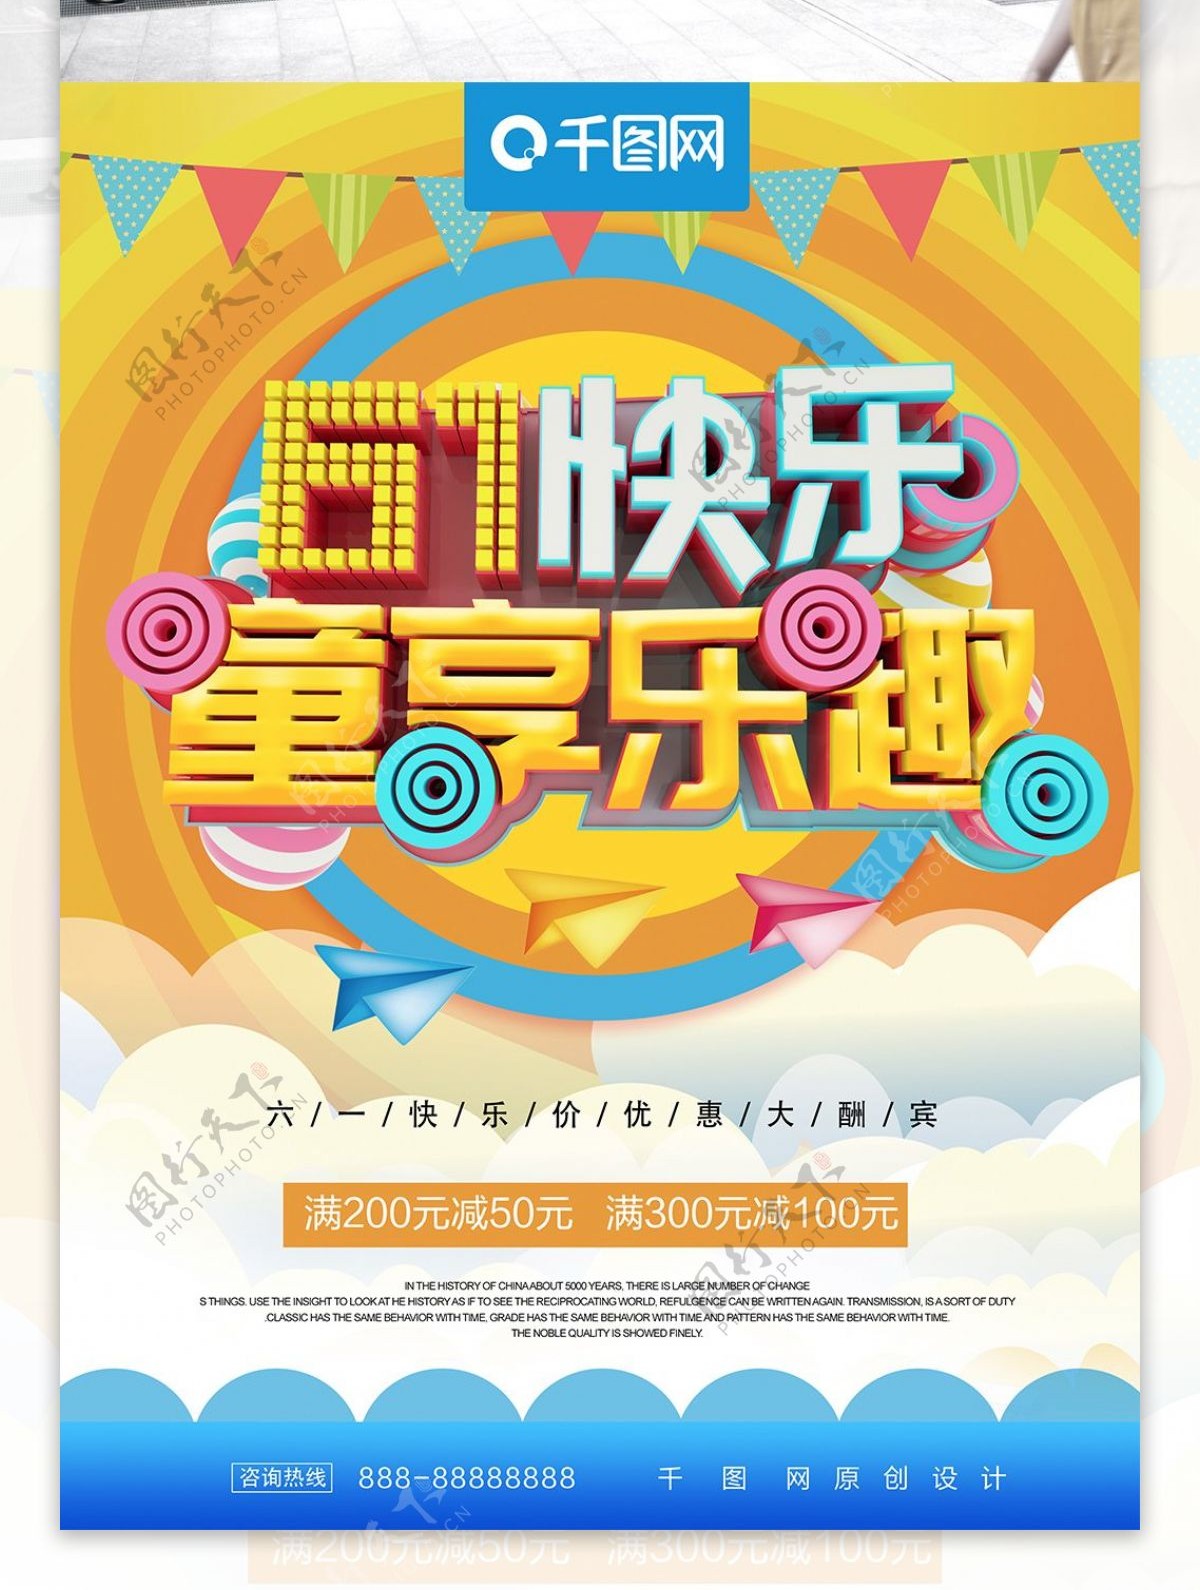 C4D创意立体字儿童节61快乐促销海报